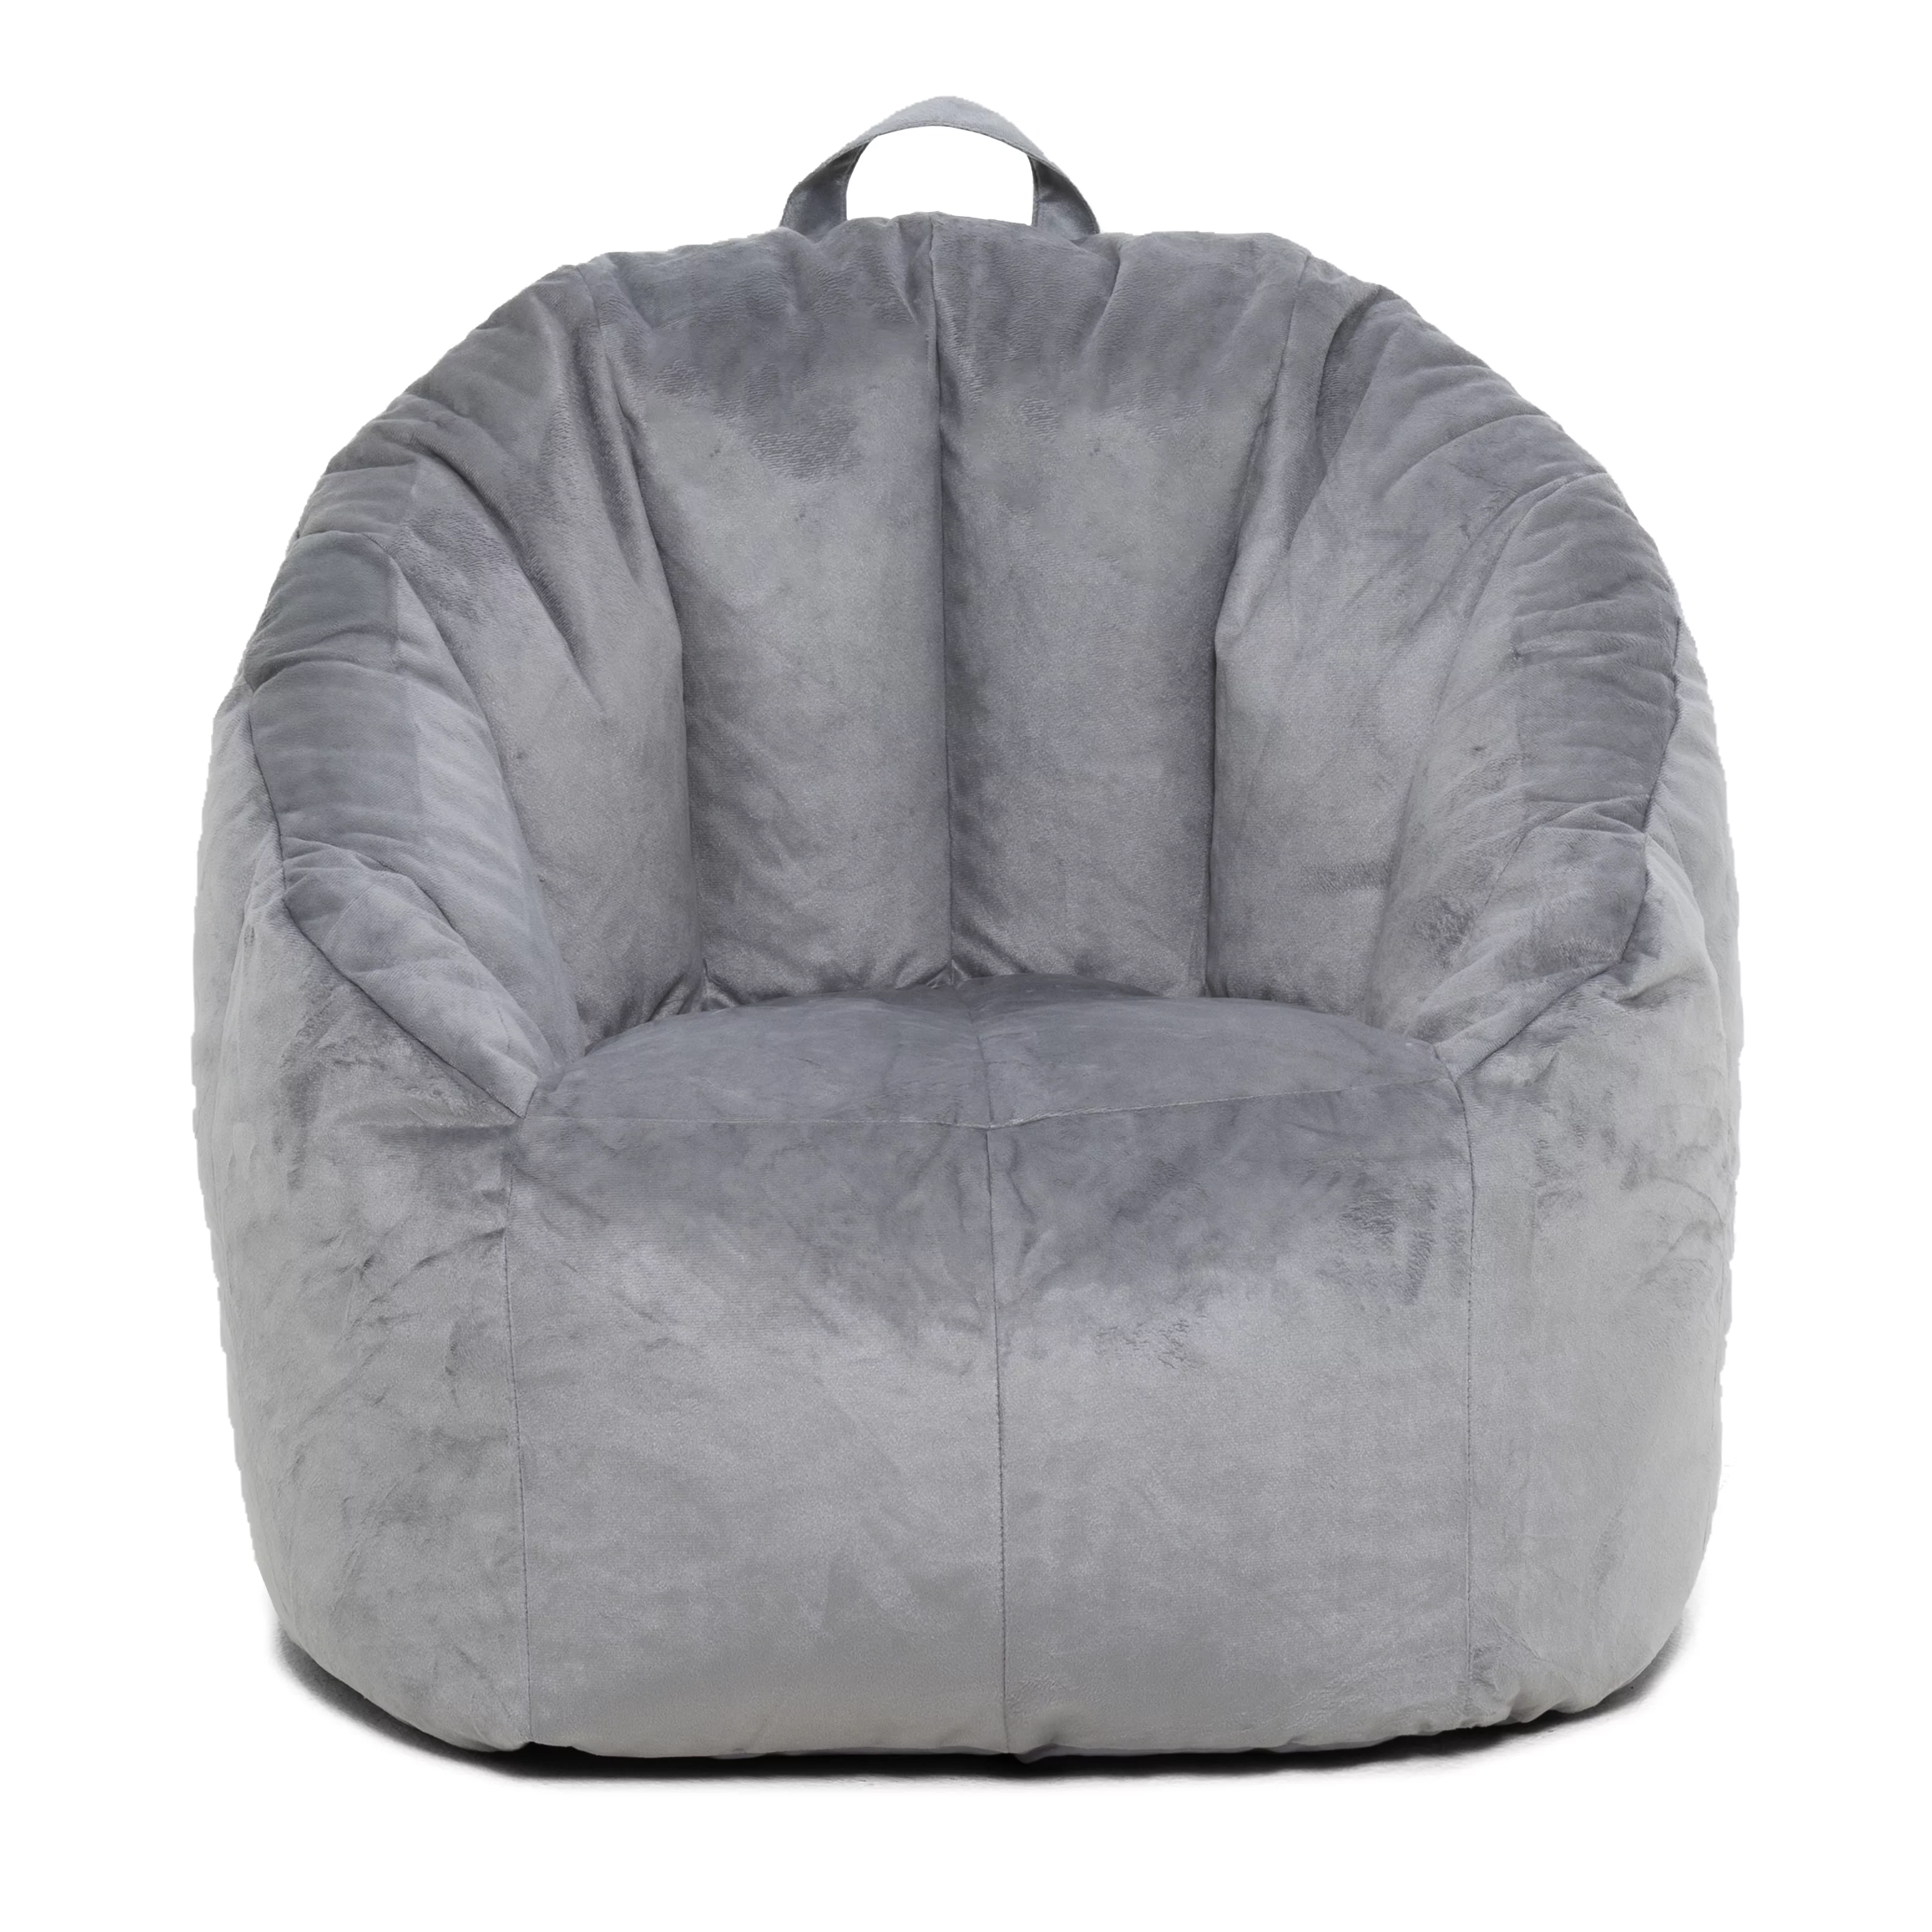 Big Joe Joey Bean Bag Chair, Plush, Kids and Teens, 2.5ft, Gray